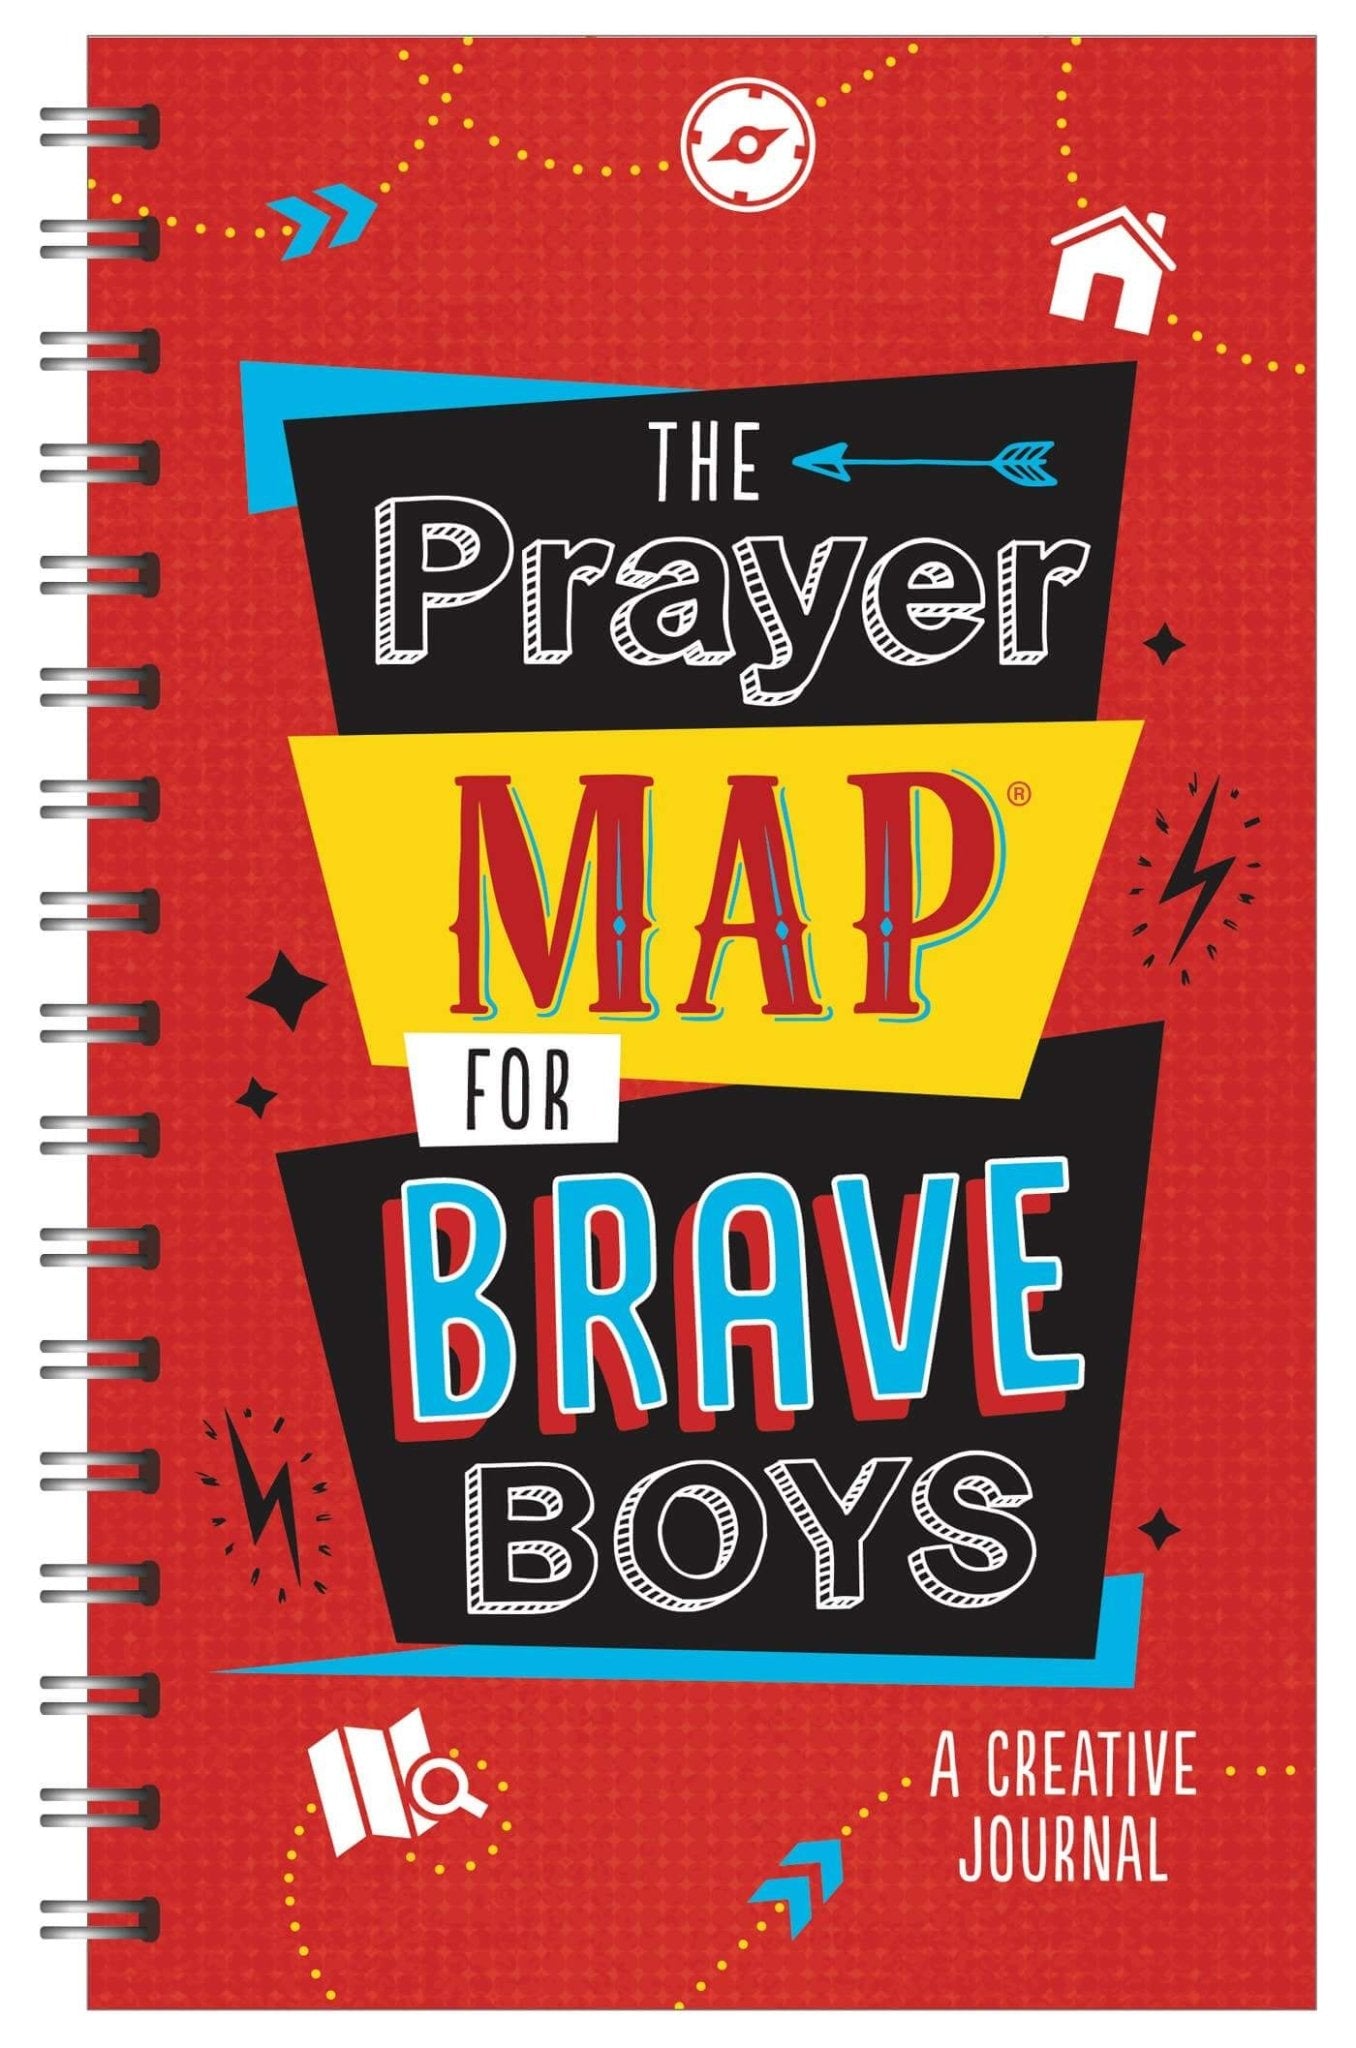 The Prayer Map for Brave Boys Journal | 2FruitBearers